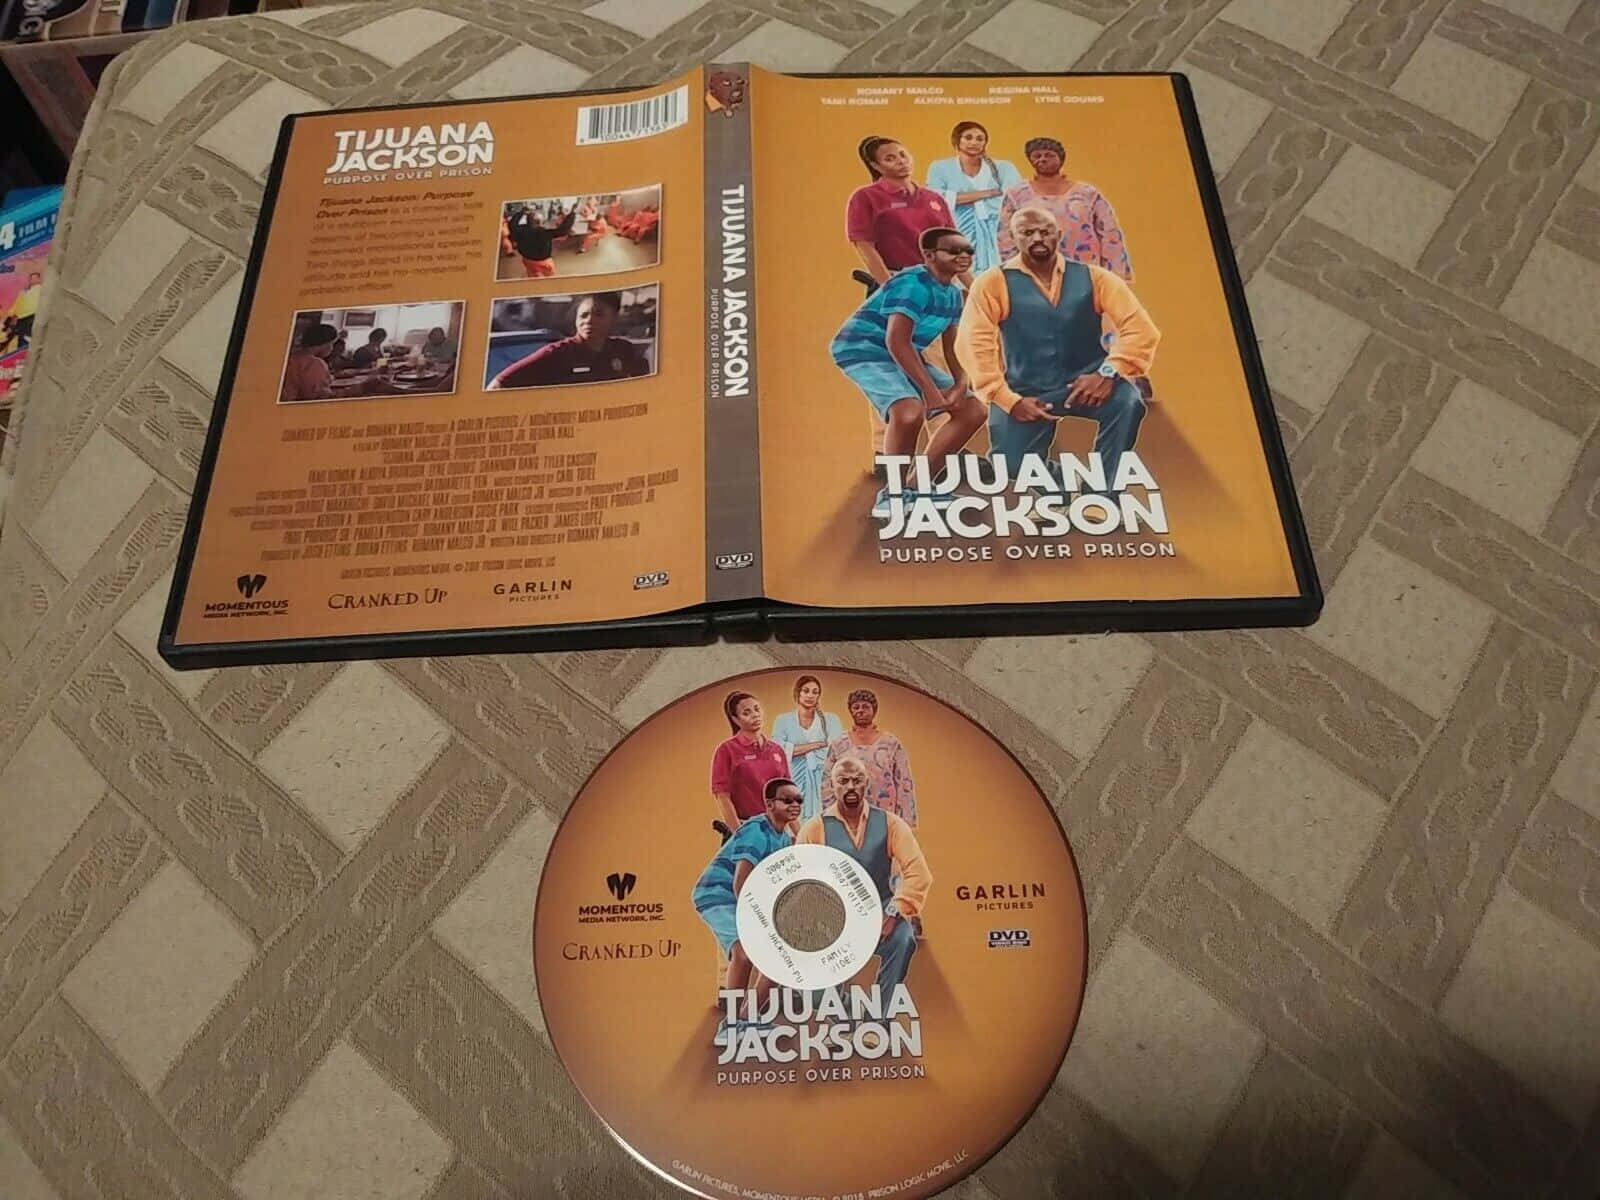 Romany Malco Tijuana Jackson: Formål over fængsel DVD Wallpaper